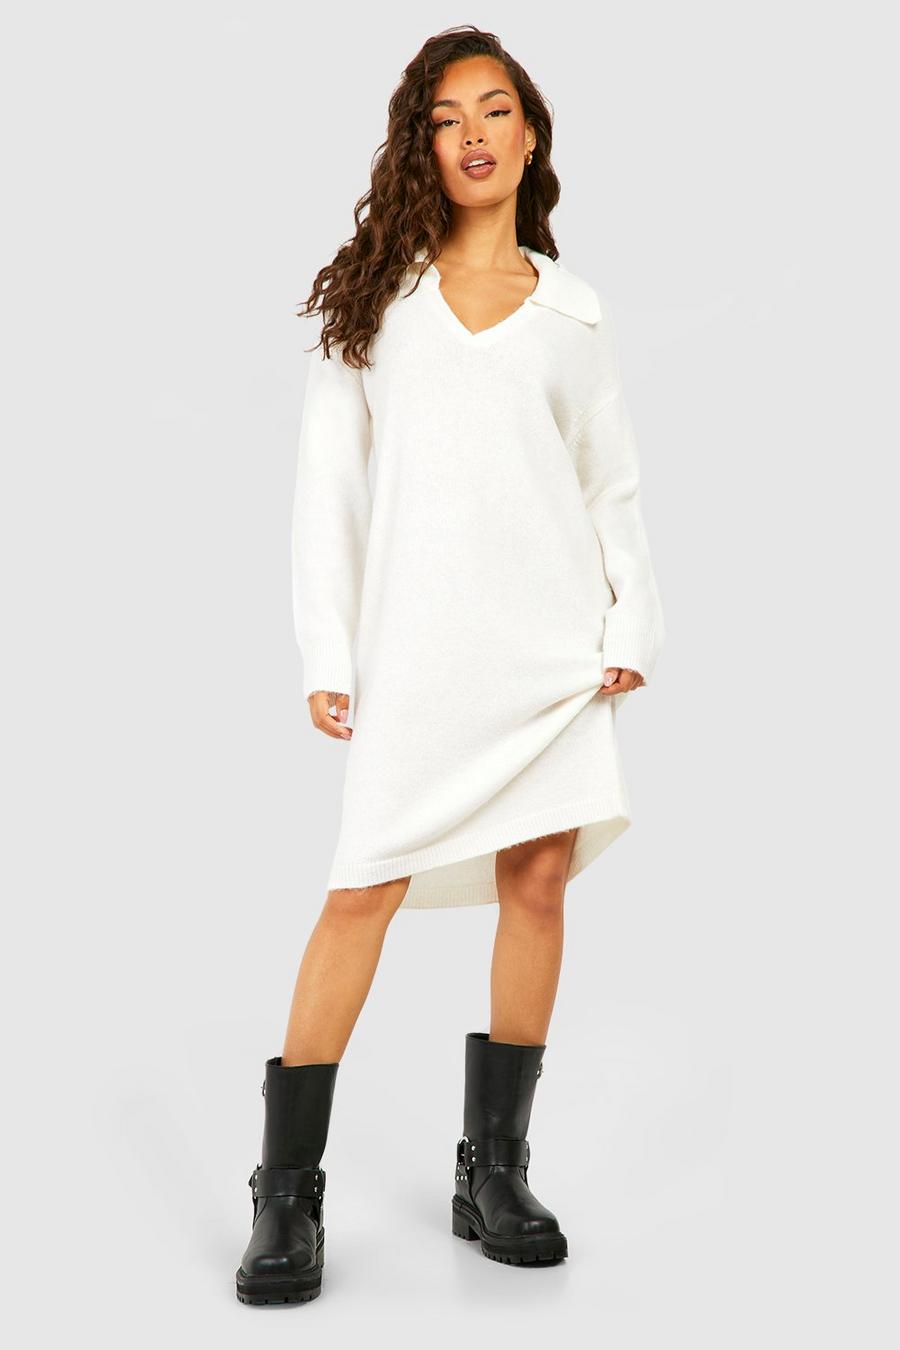 White Soft Knit Collared Jumper Dress